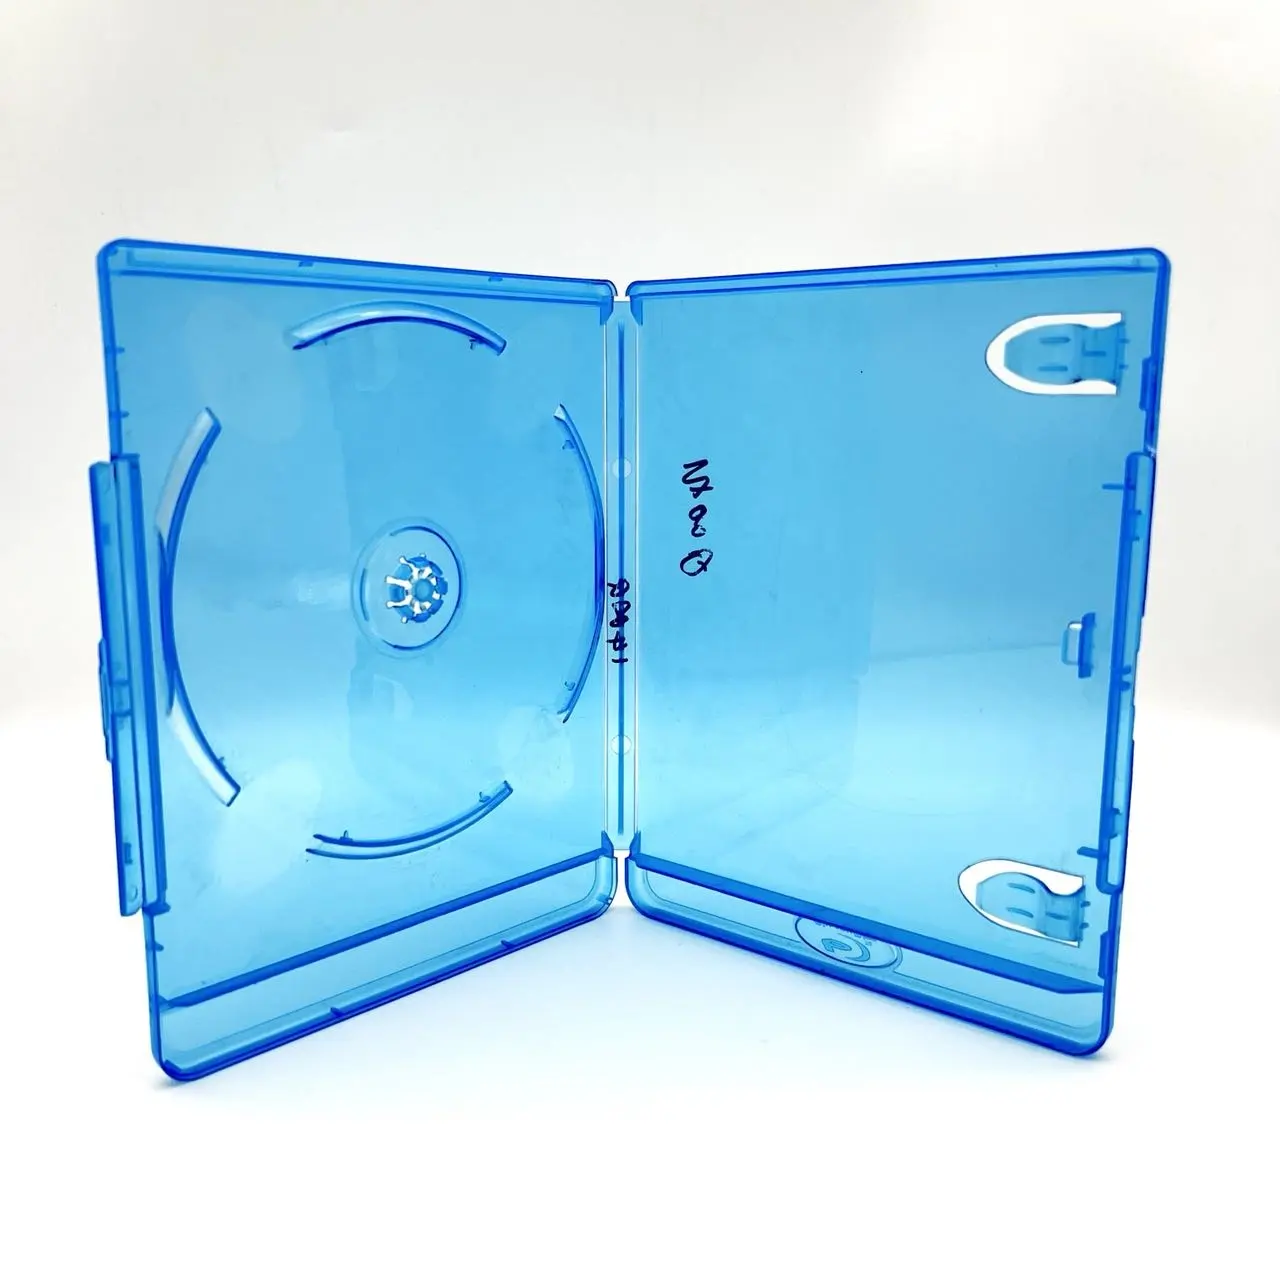 Blu_ray प्लास्टिक प्रकरण के लिए भंडारण सीडी. DVD डिस्क _ PS3 PS5 डिस्क मामले PS4 खेल मामले